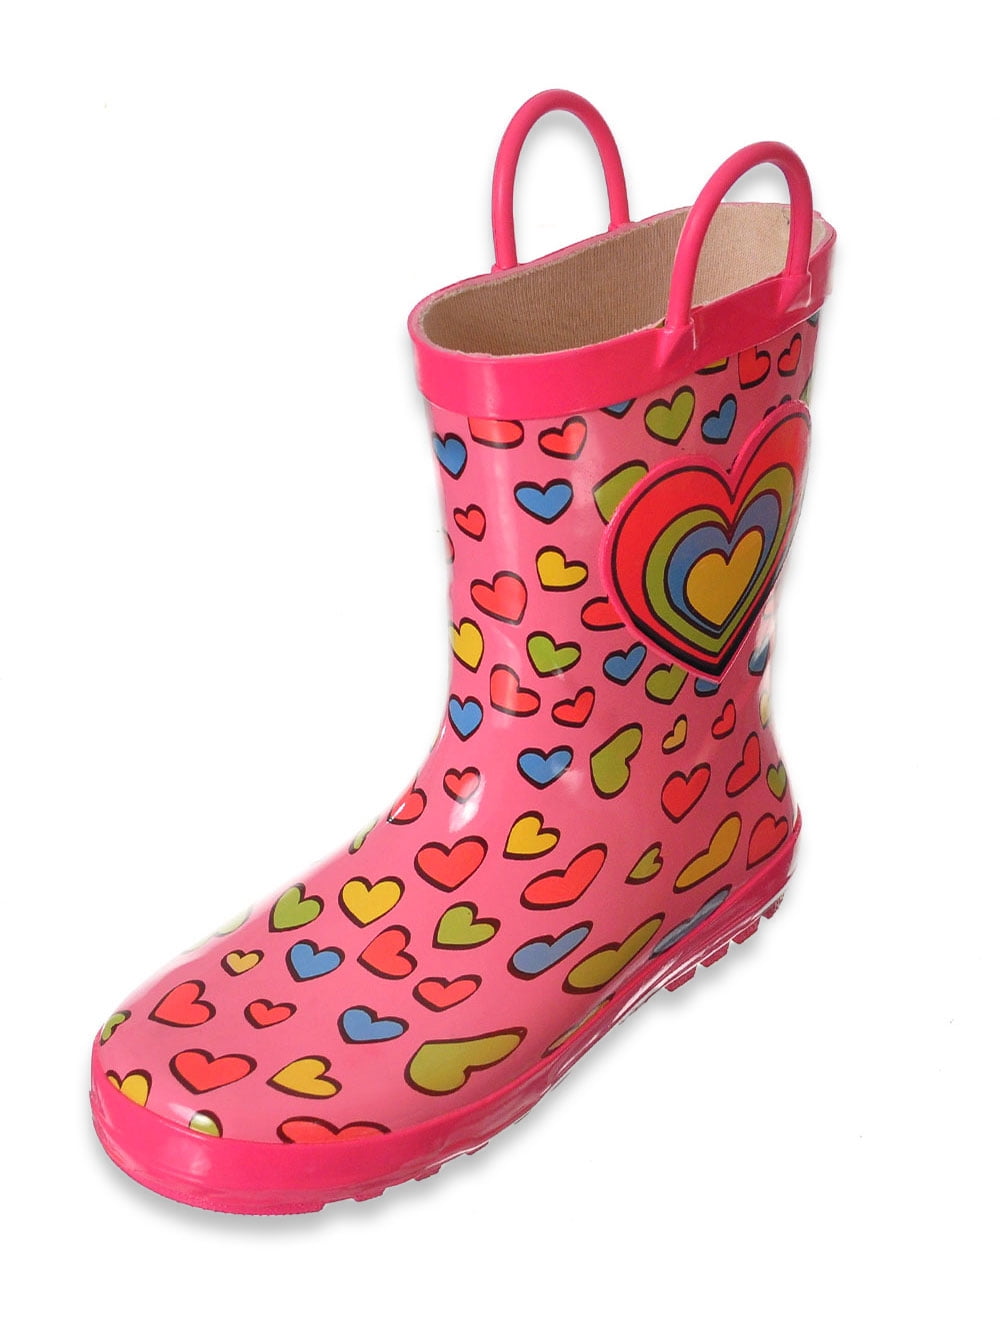 Lilly Lilly Girls Rainbow Heart Rain Boots Toddler Sizes 5 10 Pink 6 Toddler Walmart Com Walmart Com